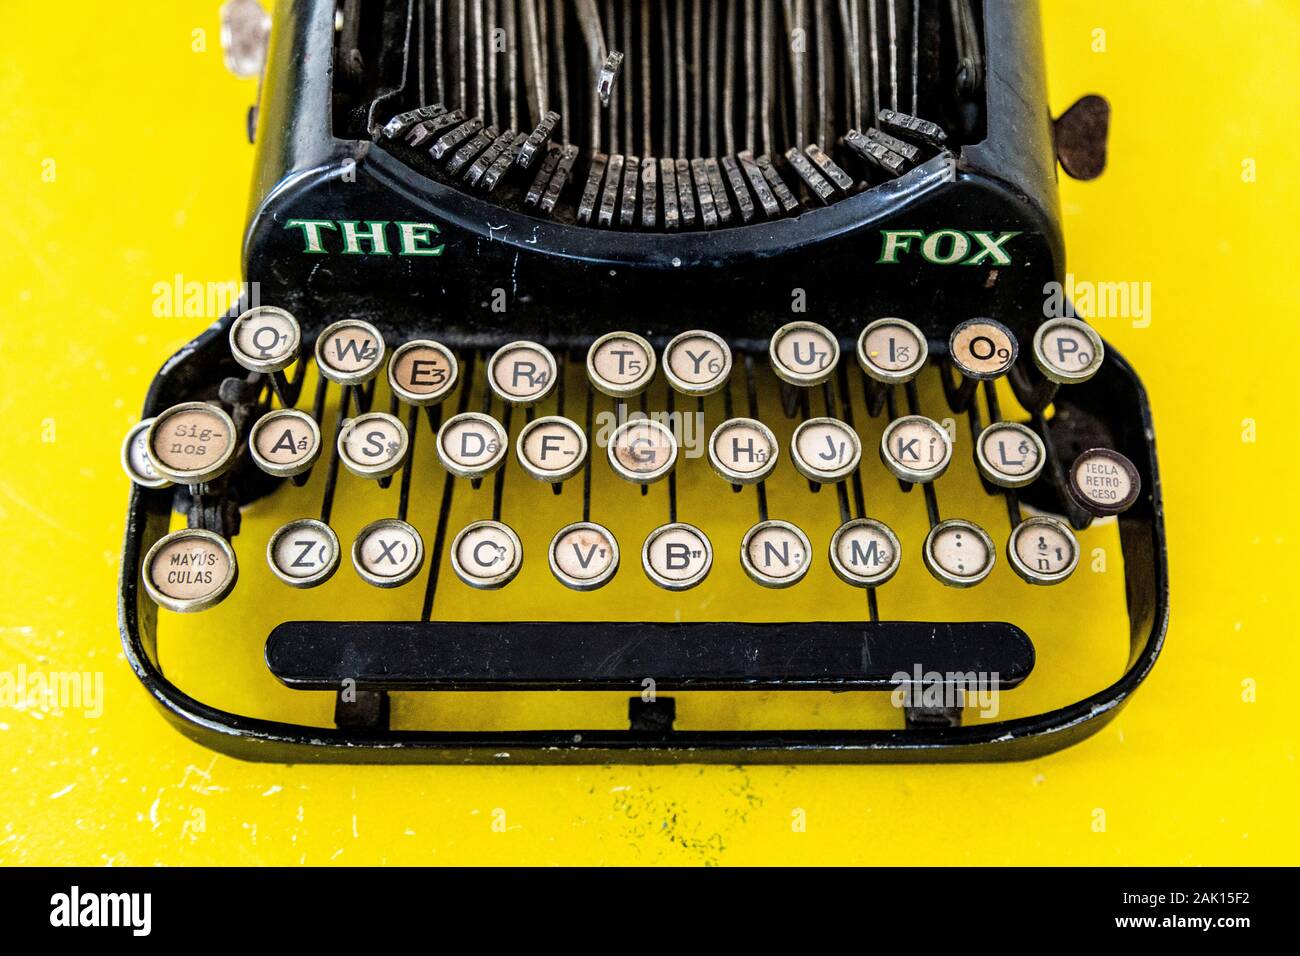 La Fox vintage typewriter sur fond jaune Banque D'Images